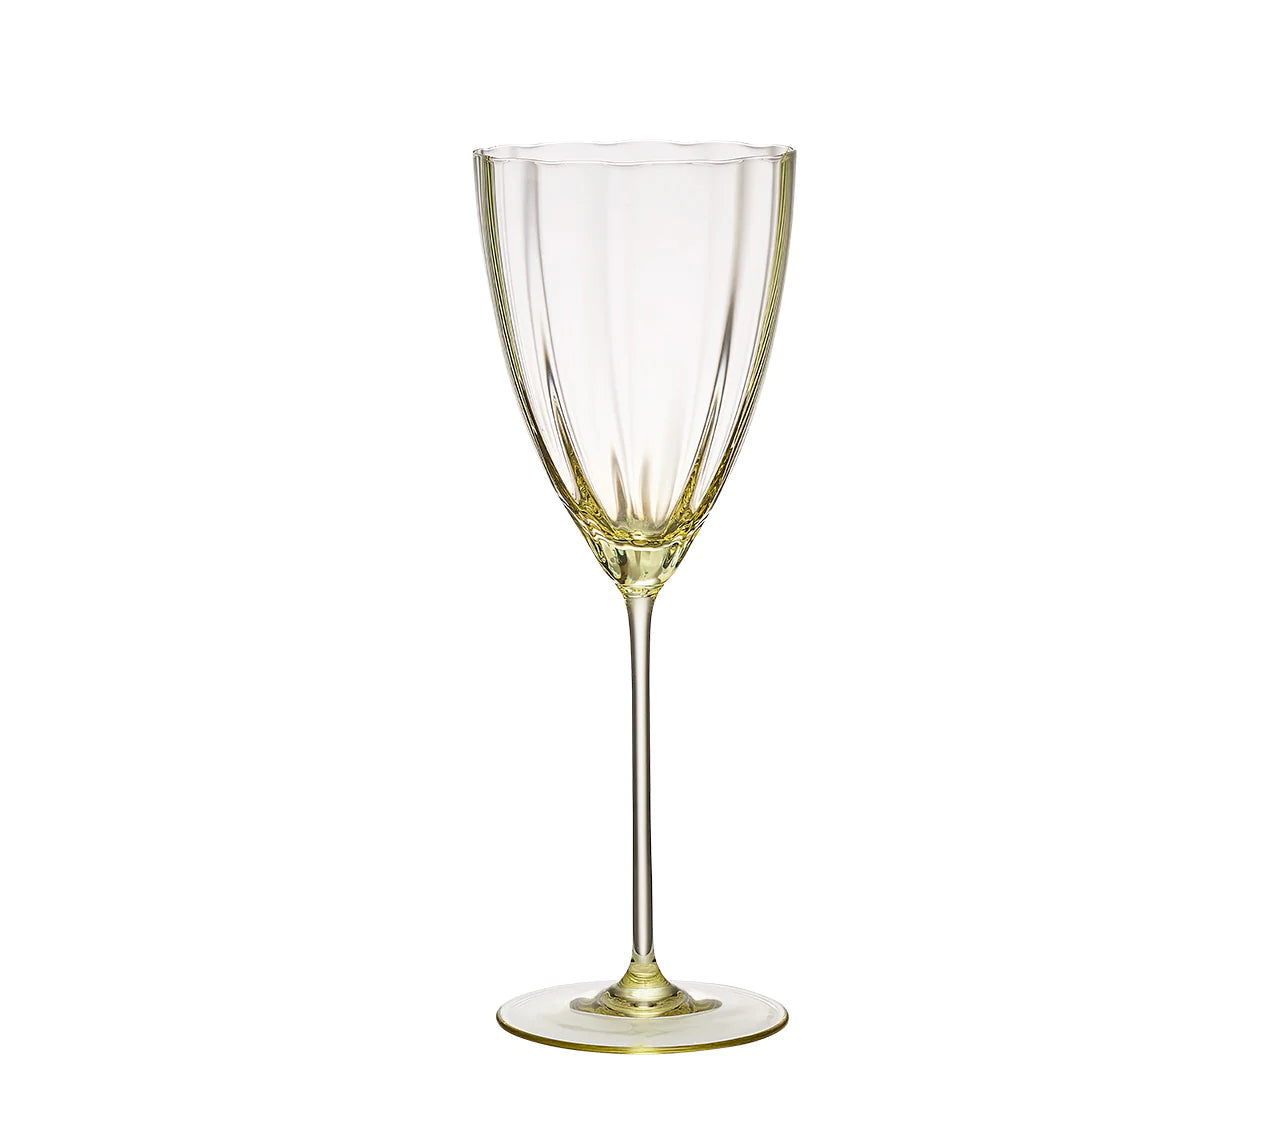 Luna Wine Glass in Citrine, Set of 4